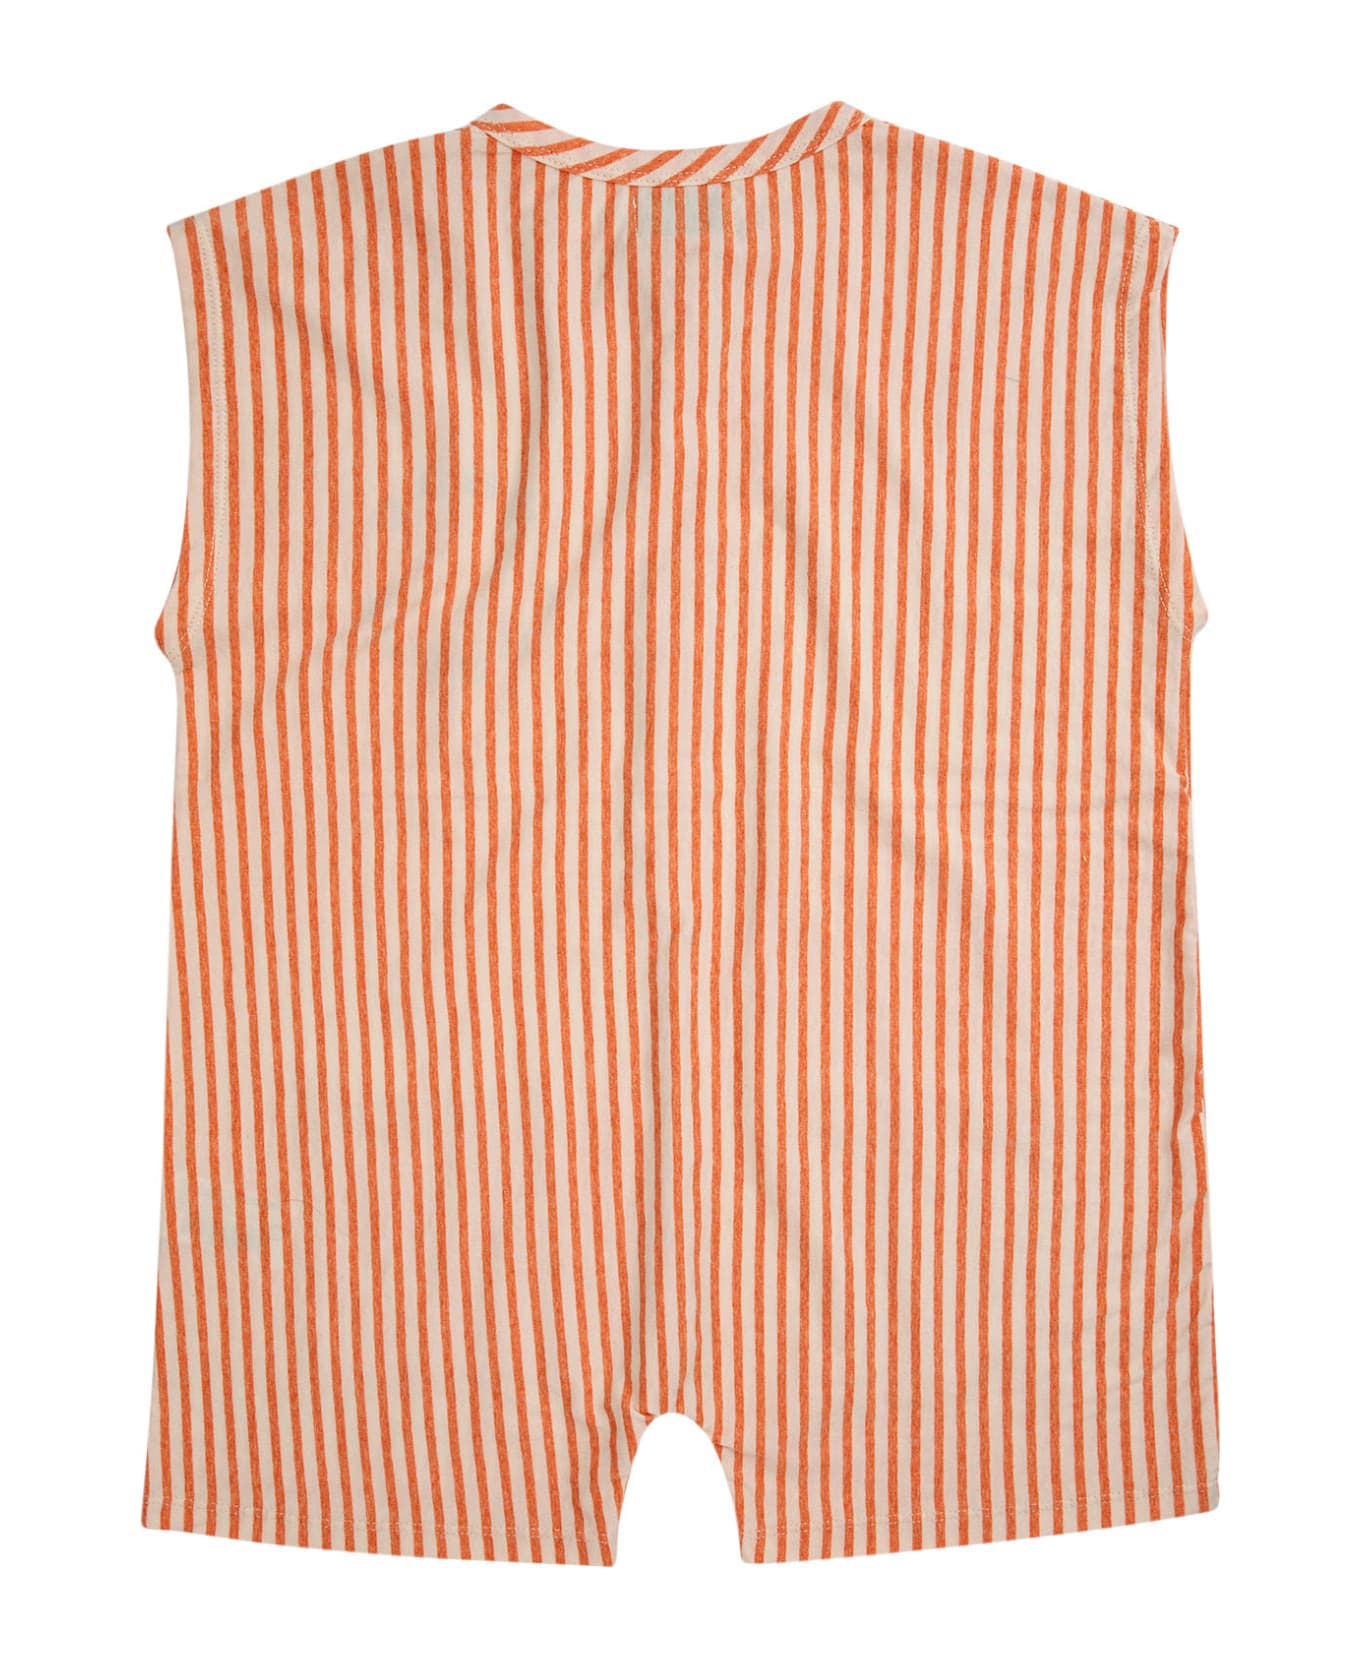 Bobo Choses Orange Jumpsuit For Girl With Stripes And Logo - Orange